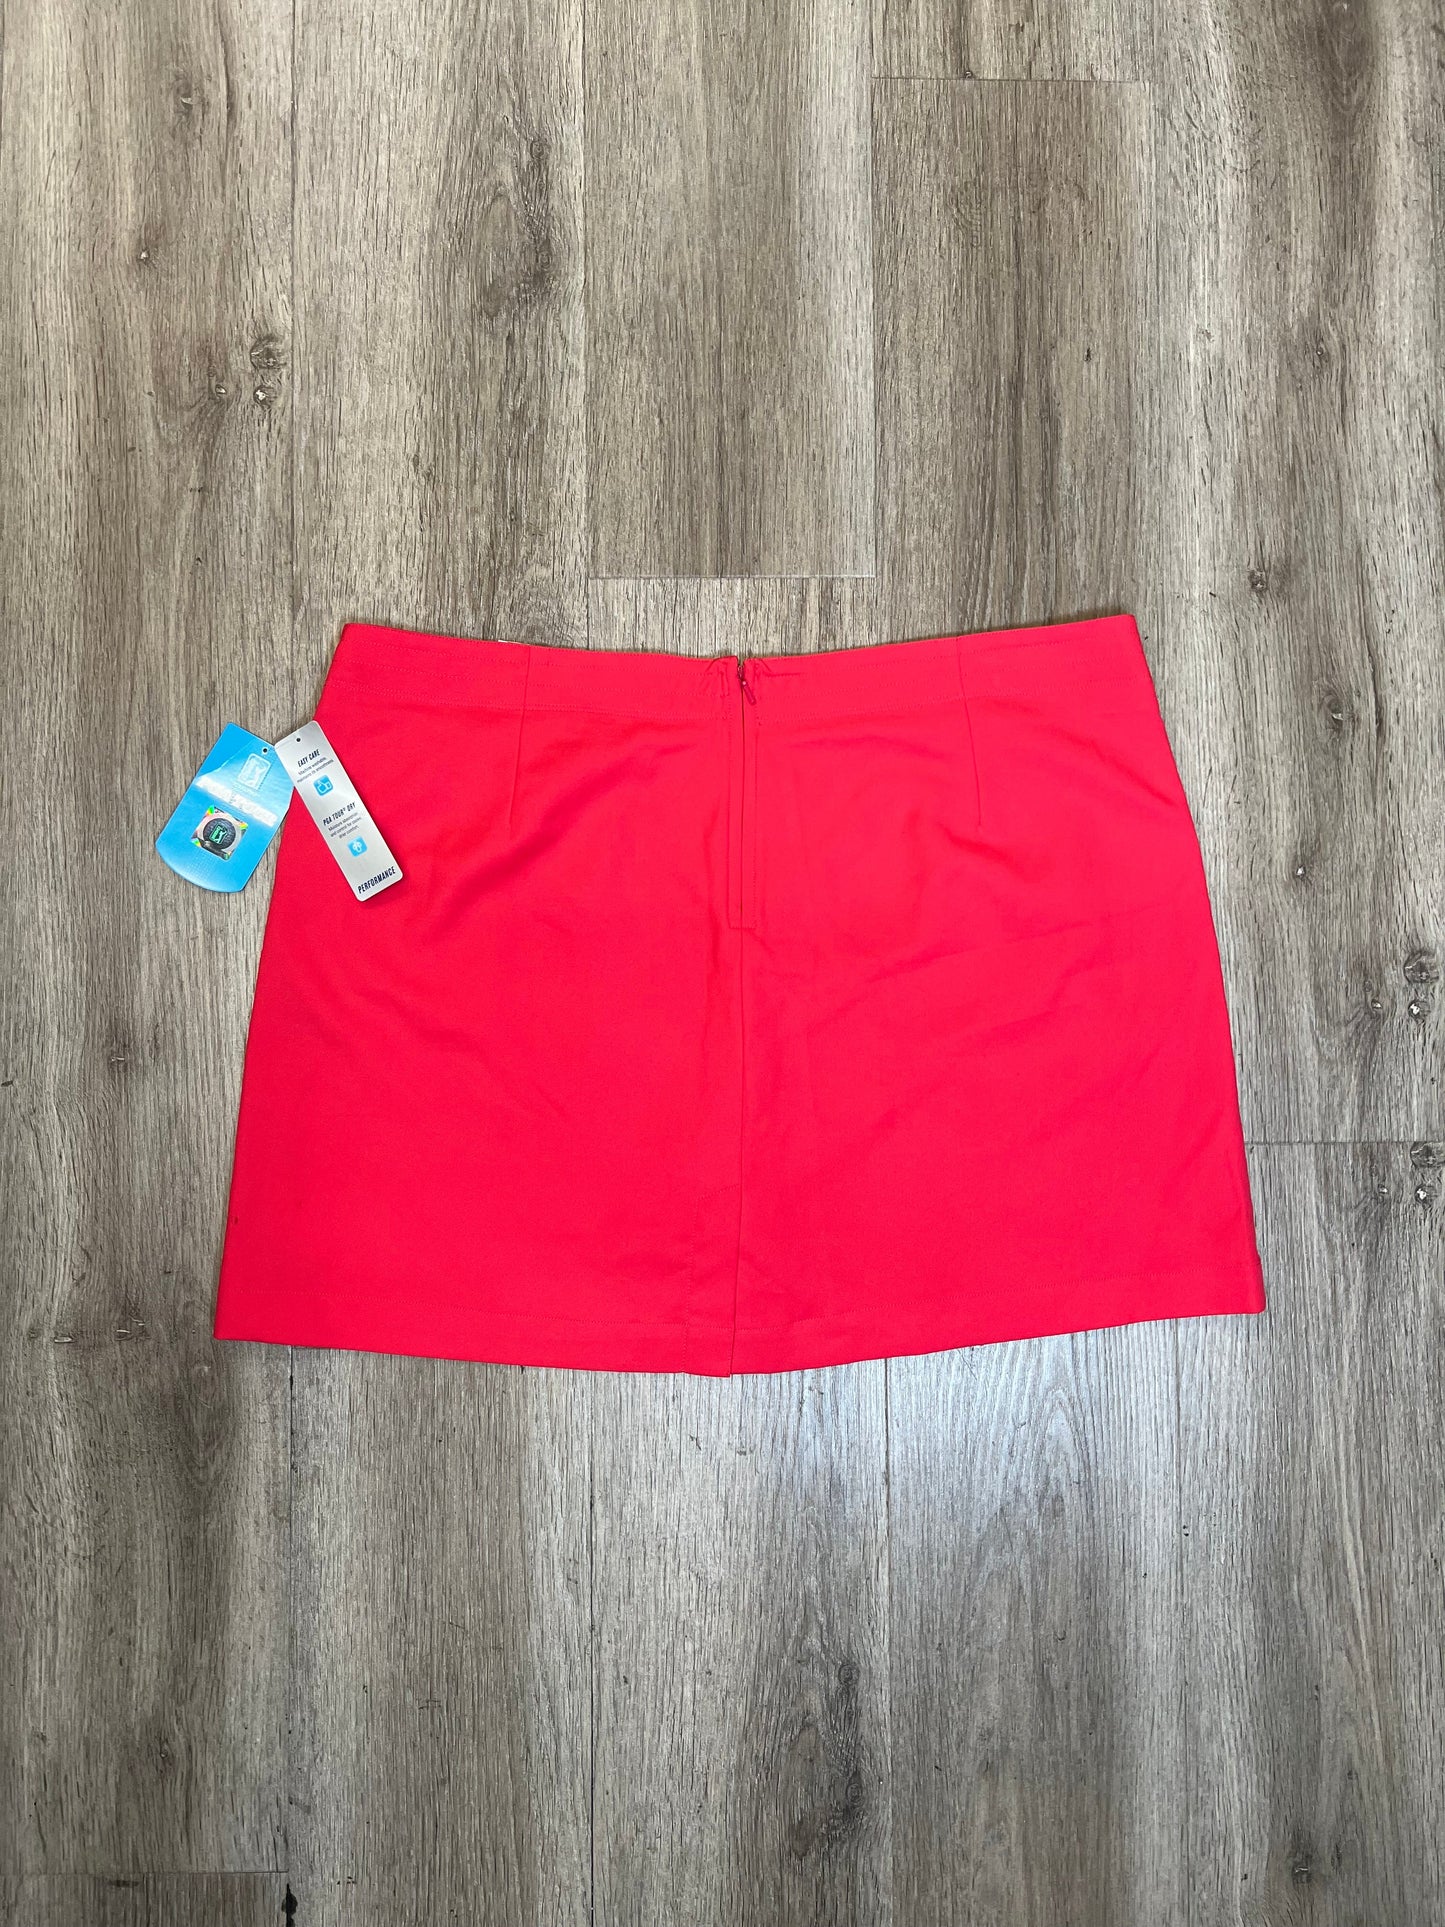 Athletic Skirt Skort By PGA Tour  Size: Xl